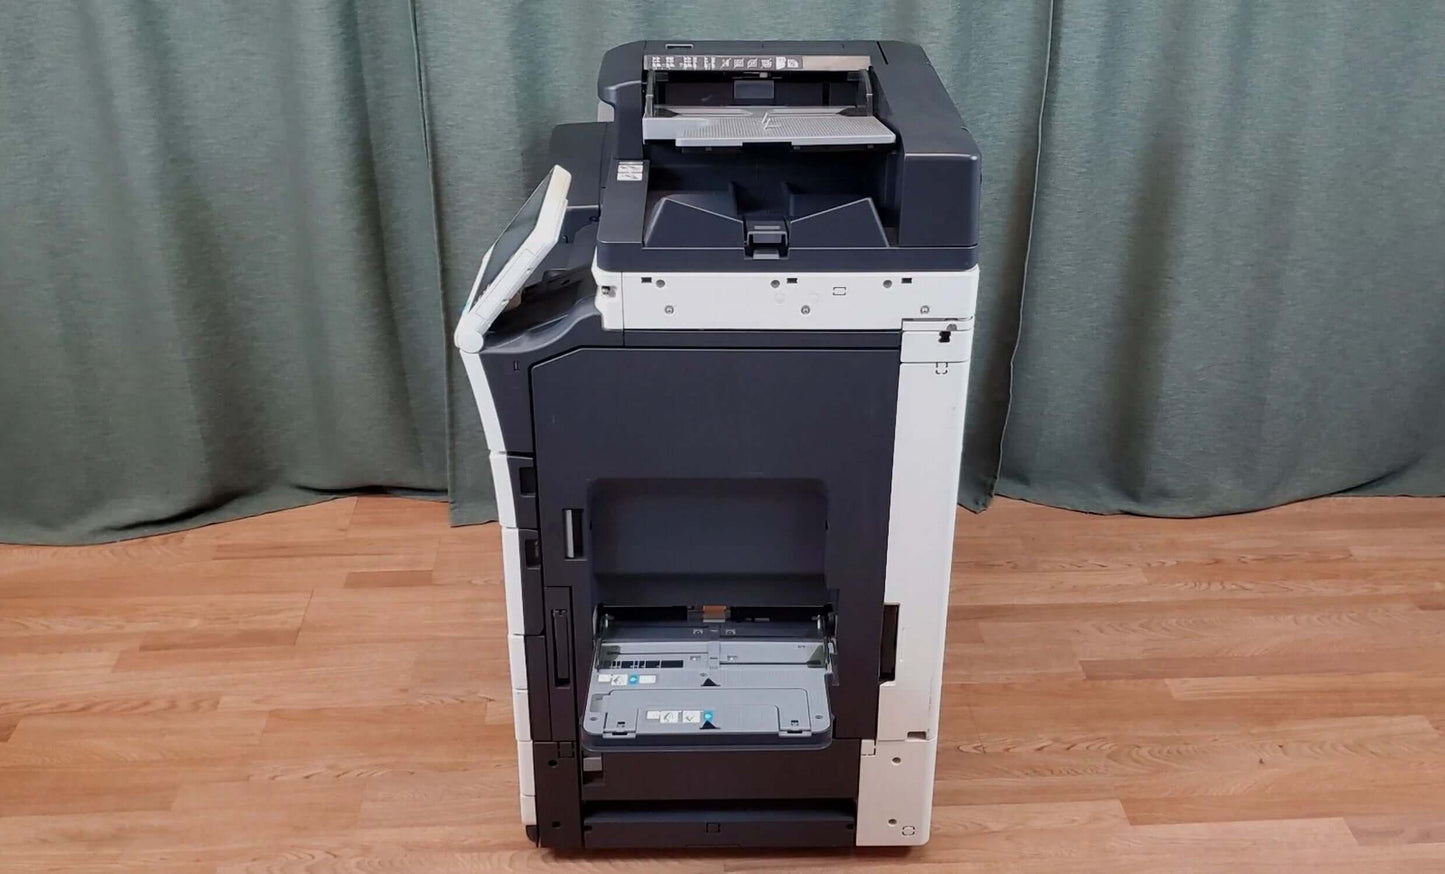 Demo Konica Minolta Bizhub C558 Color Copier Printer Booklet Finisher Low Usage 29k